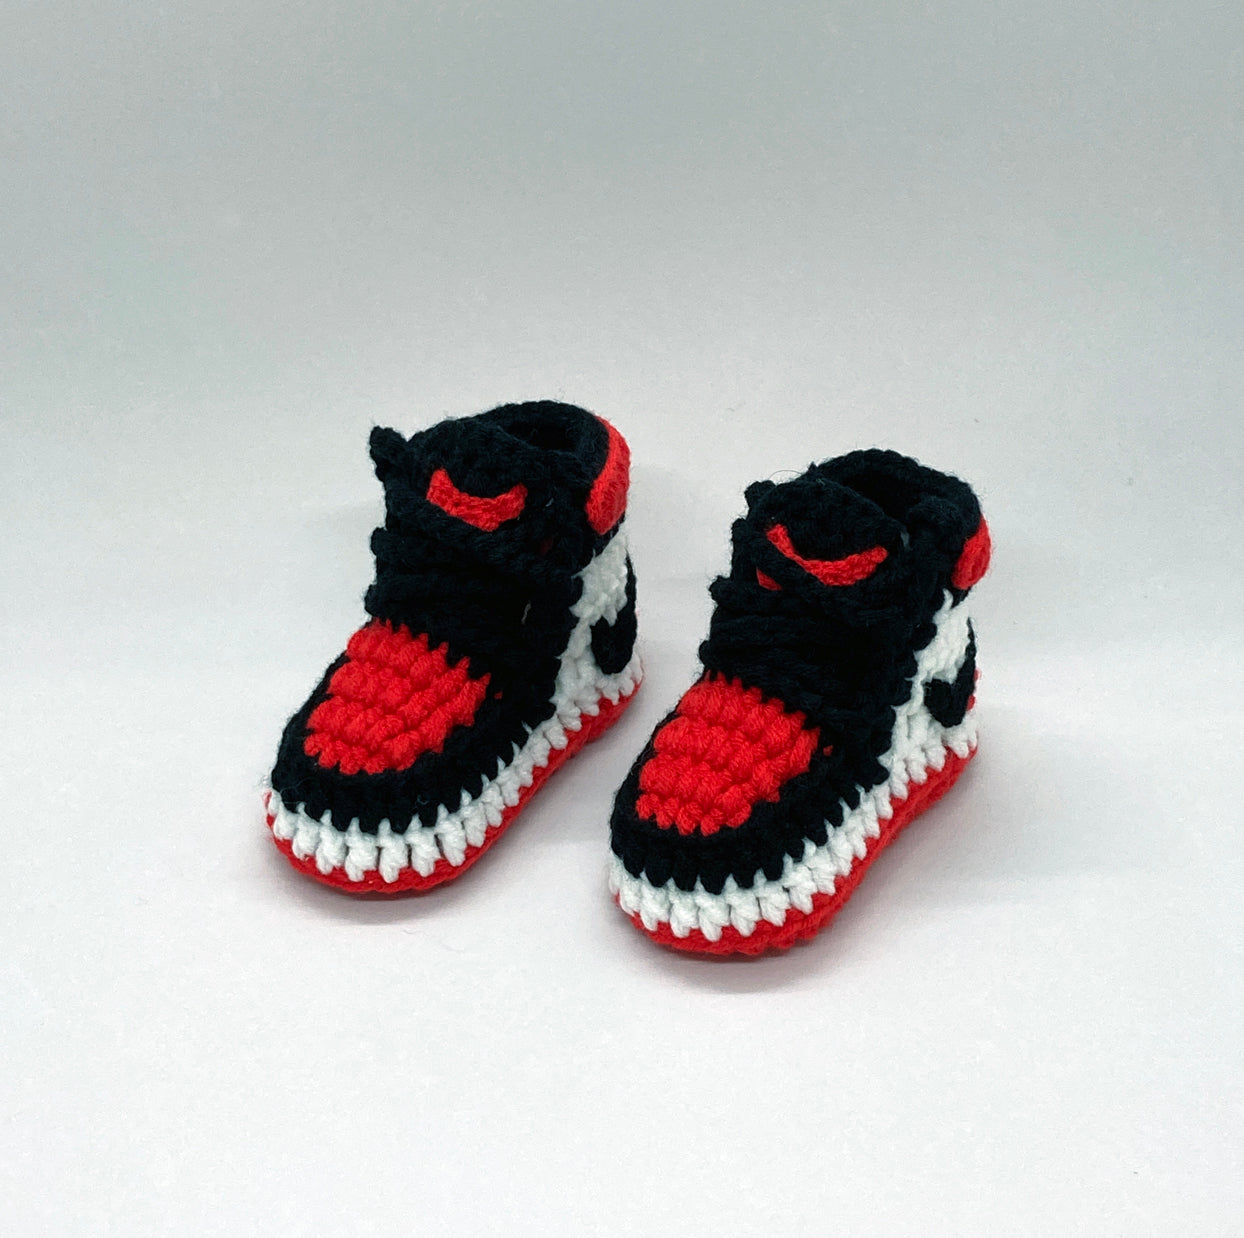 crochet jordan shoes